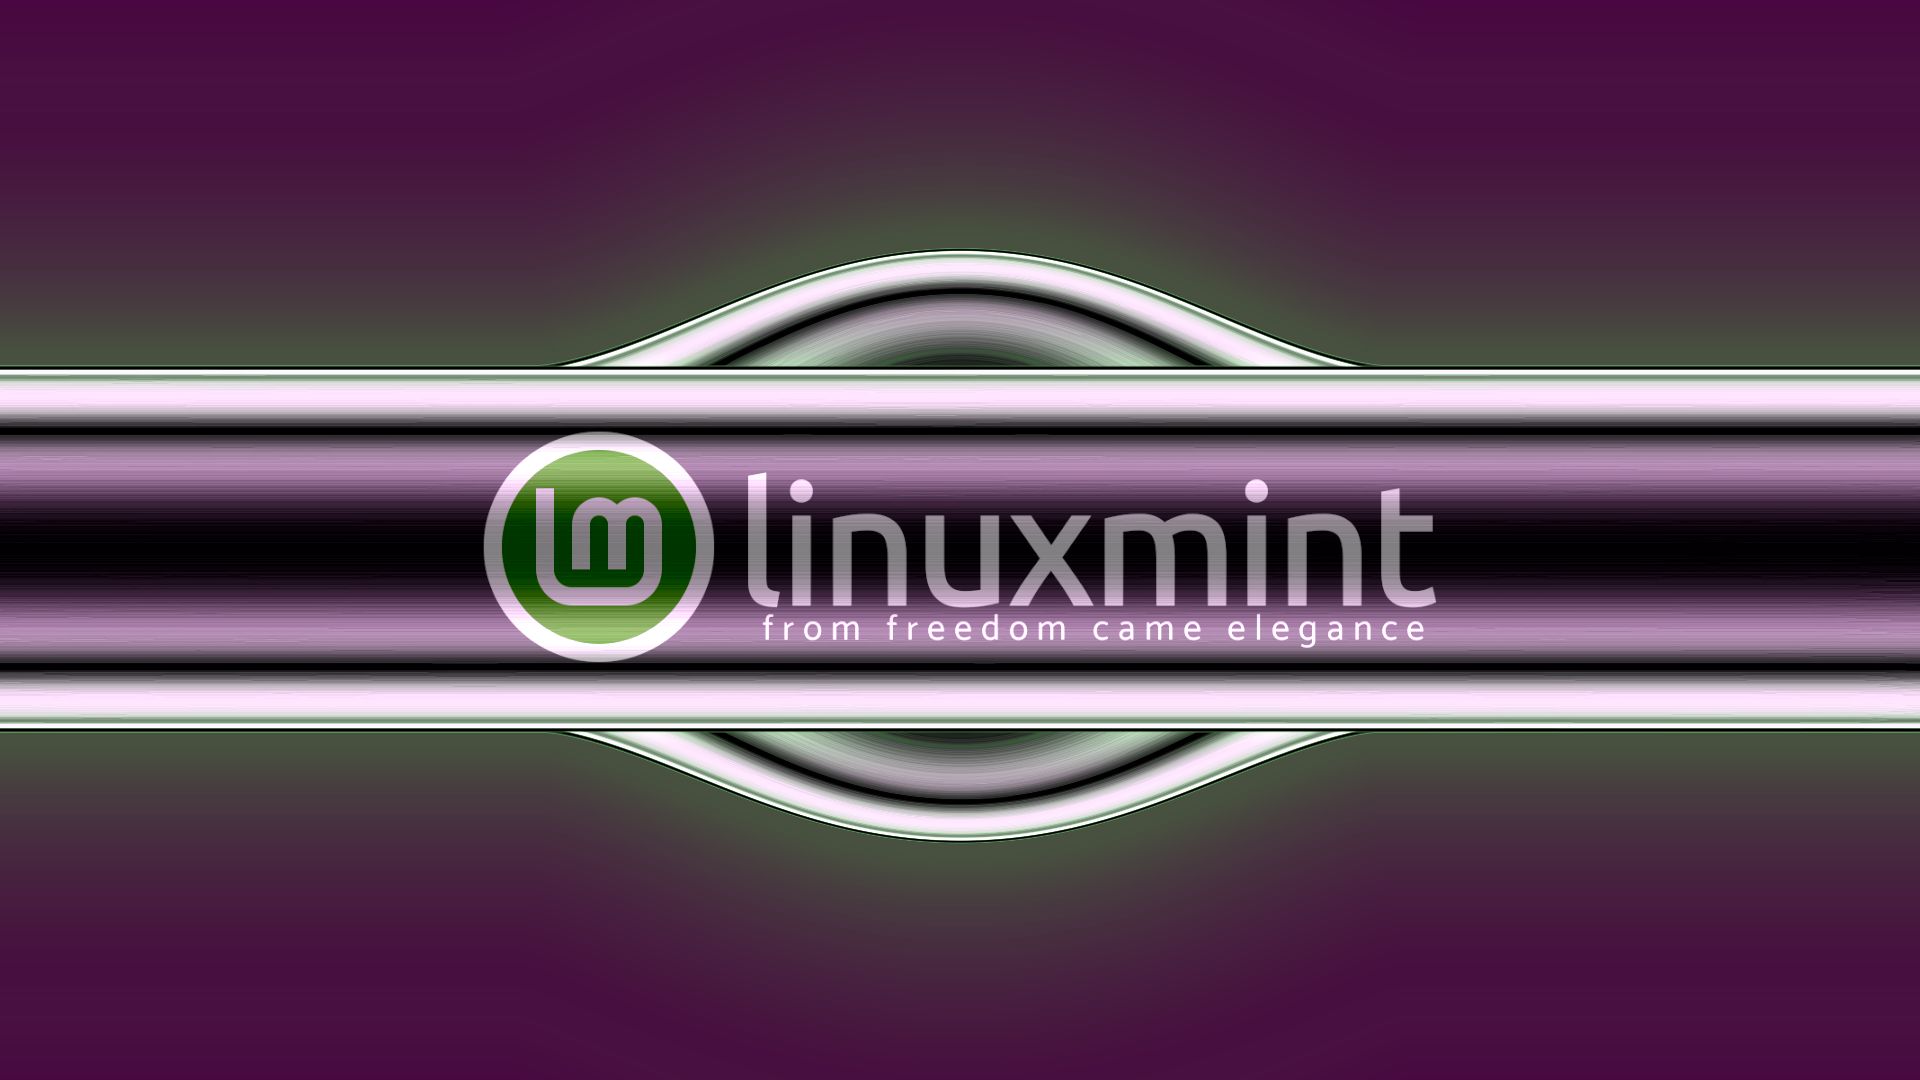 linux mint wallpaper 1920x1080